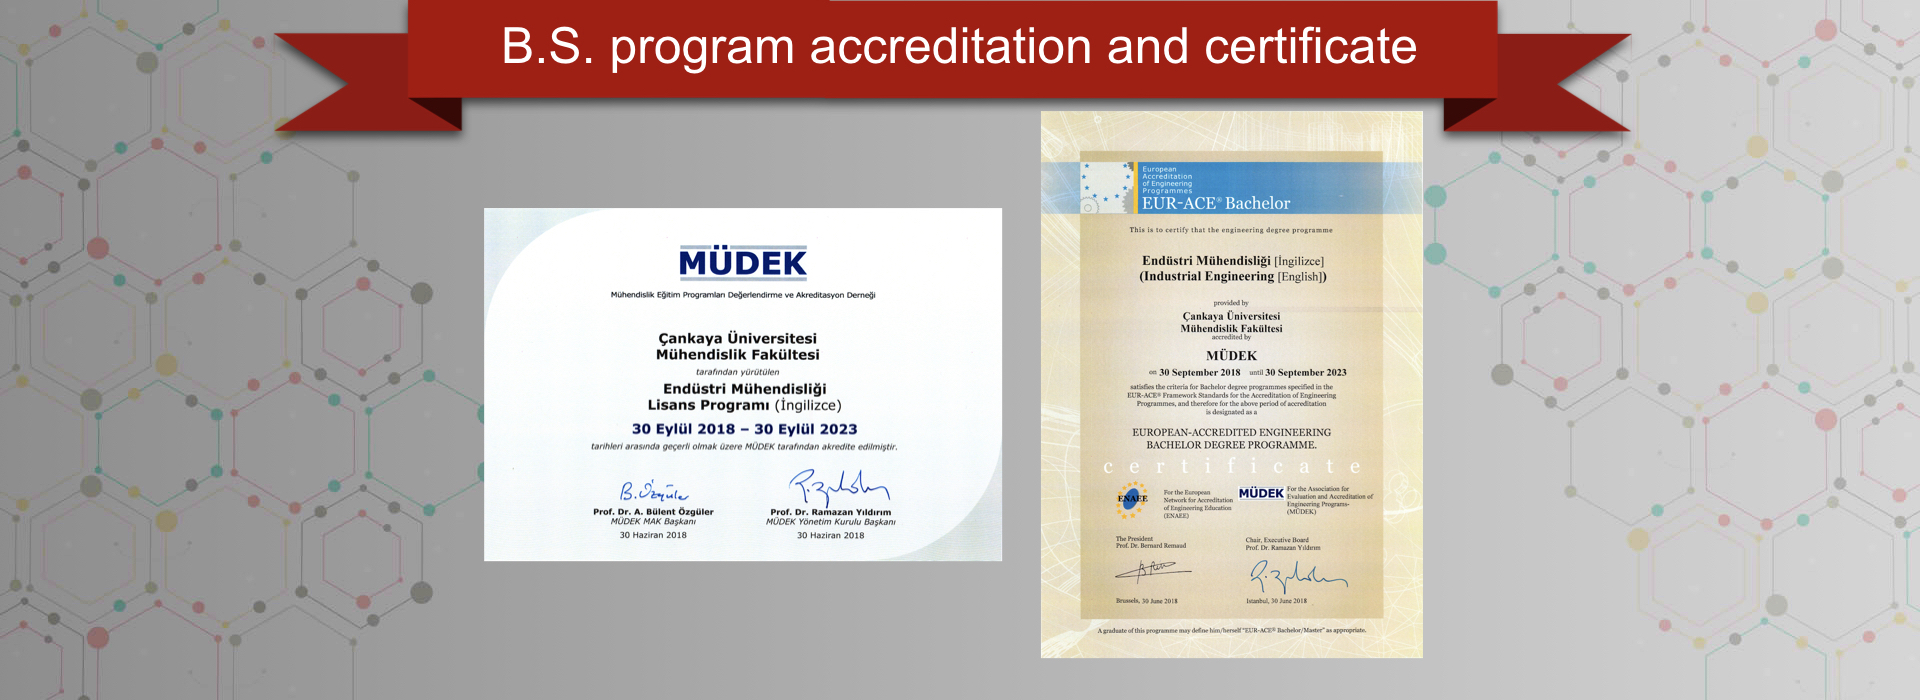 MÜDEK accreditation